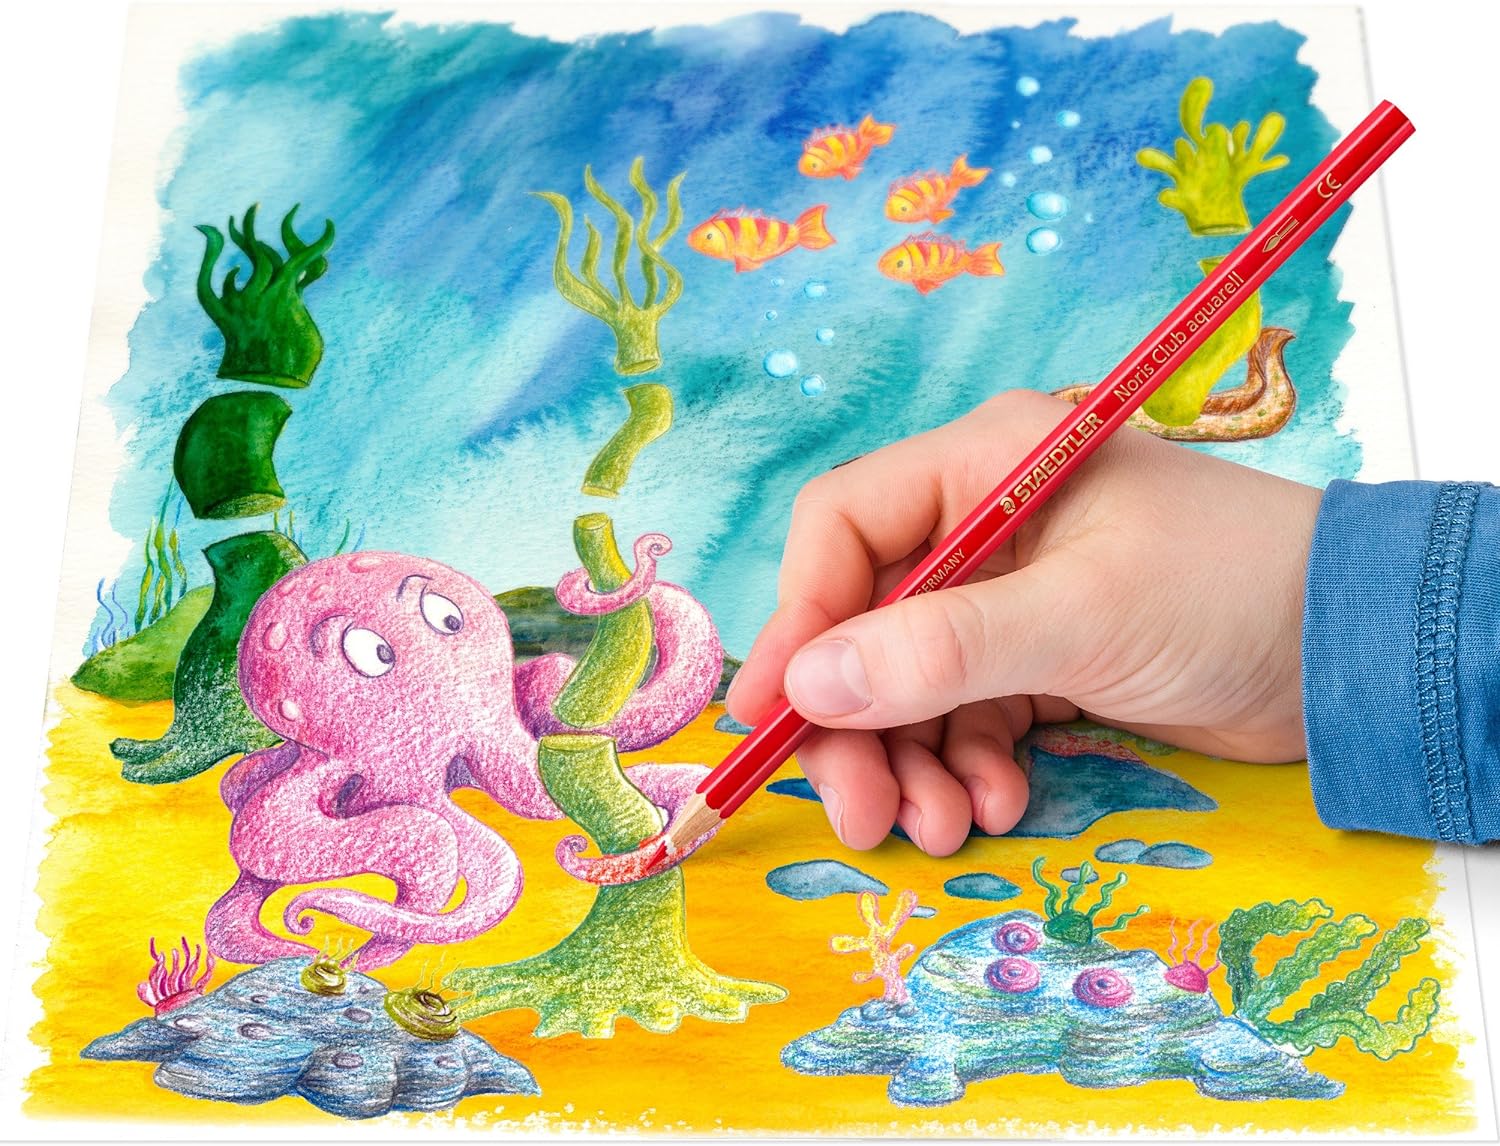 STAEDTLER 144 Noris Aquarell 24 Watercolour Pencils Plus Paint Brush